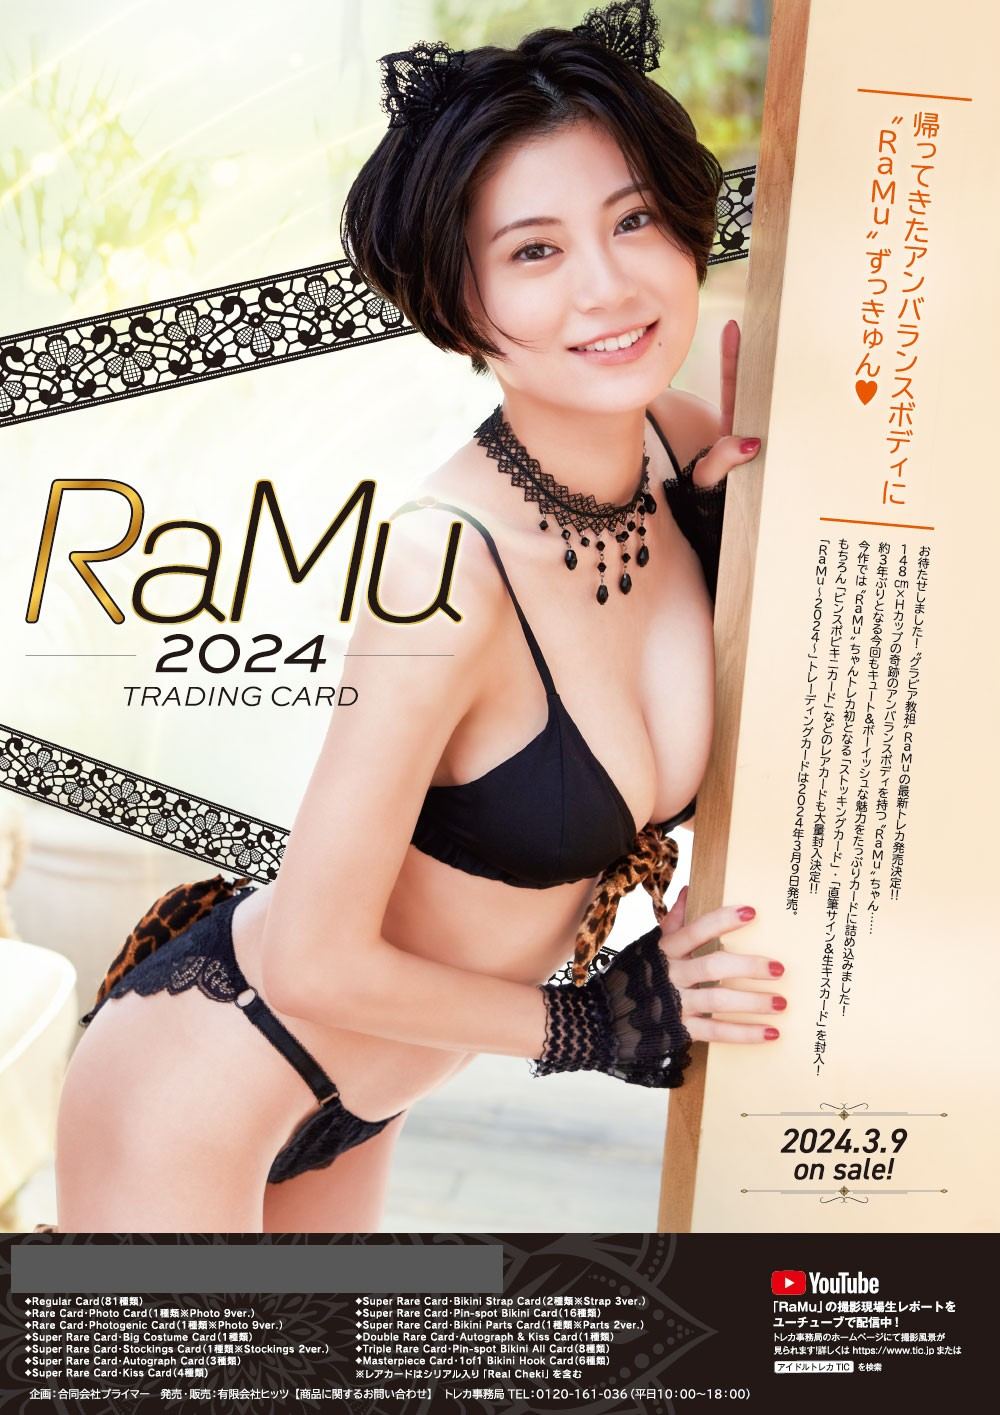 Ramu 2024 Trading Card Hits